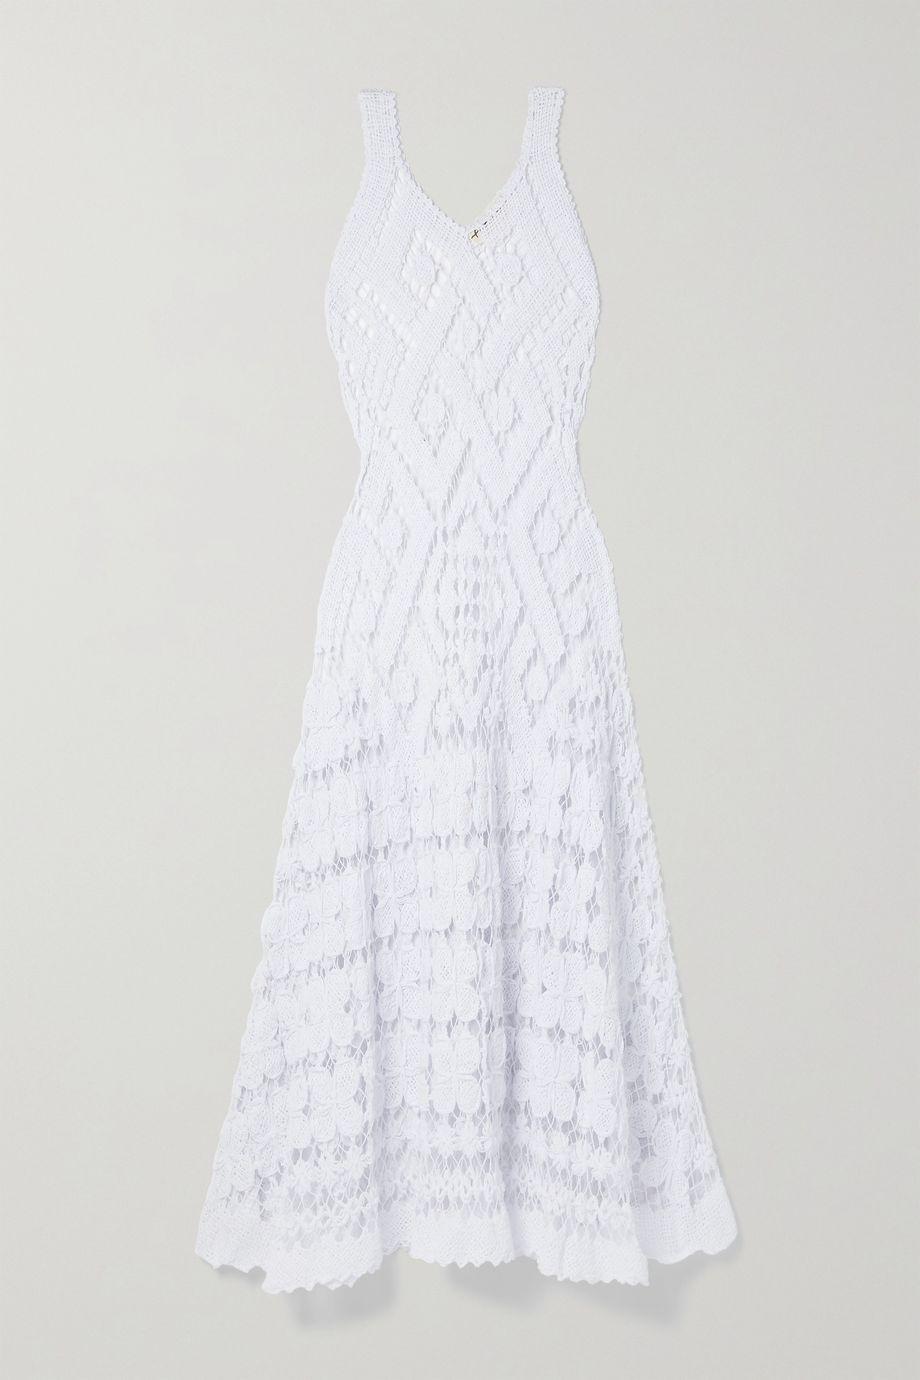 Feelings crocheted cotton maxi dress by ALIX PINHO